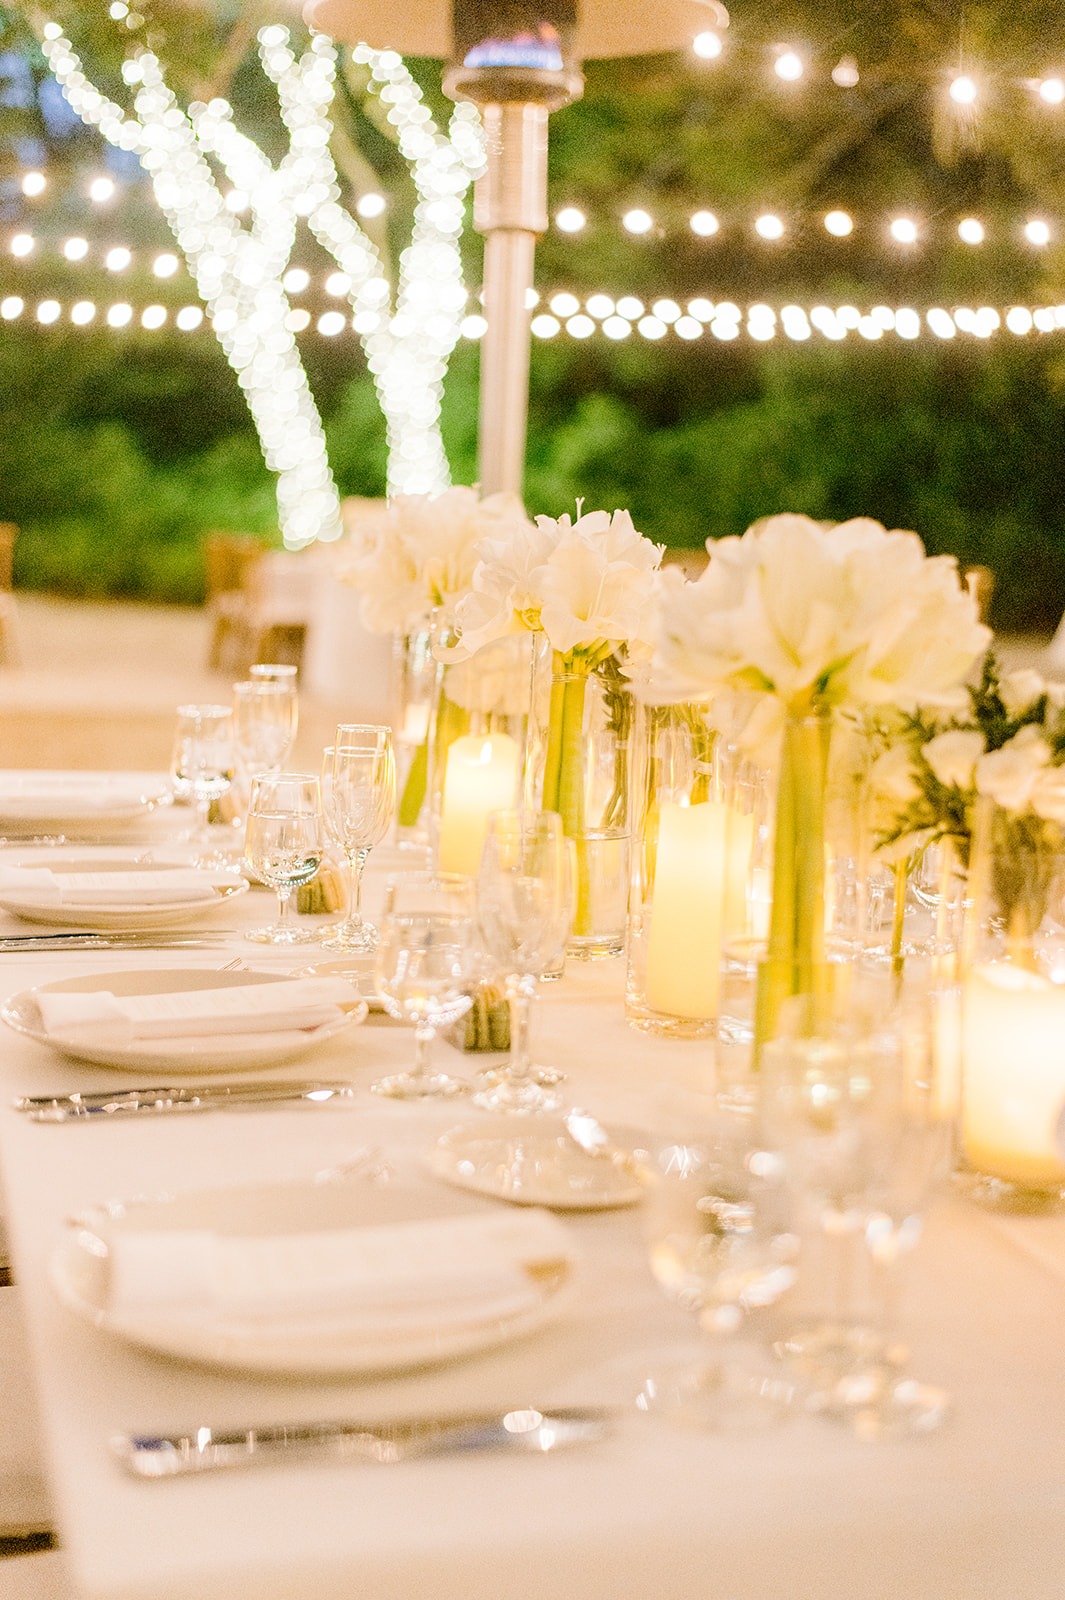 Stunning Florana Florist arrangements at Bales & Shelby's Wedding in Miami
